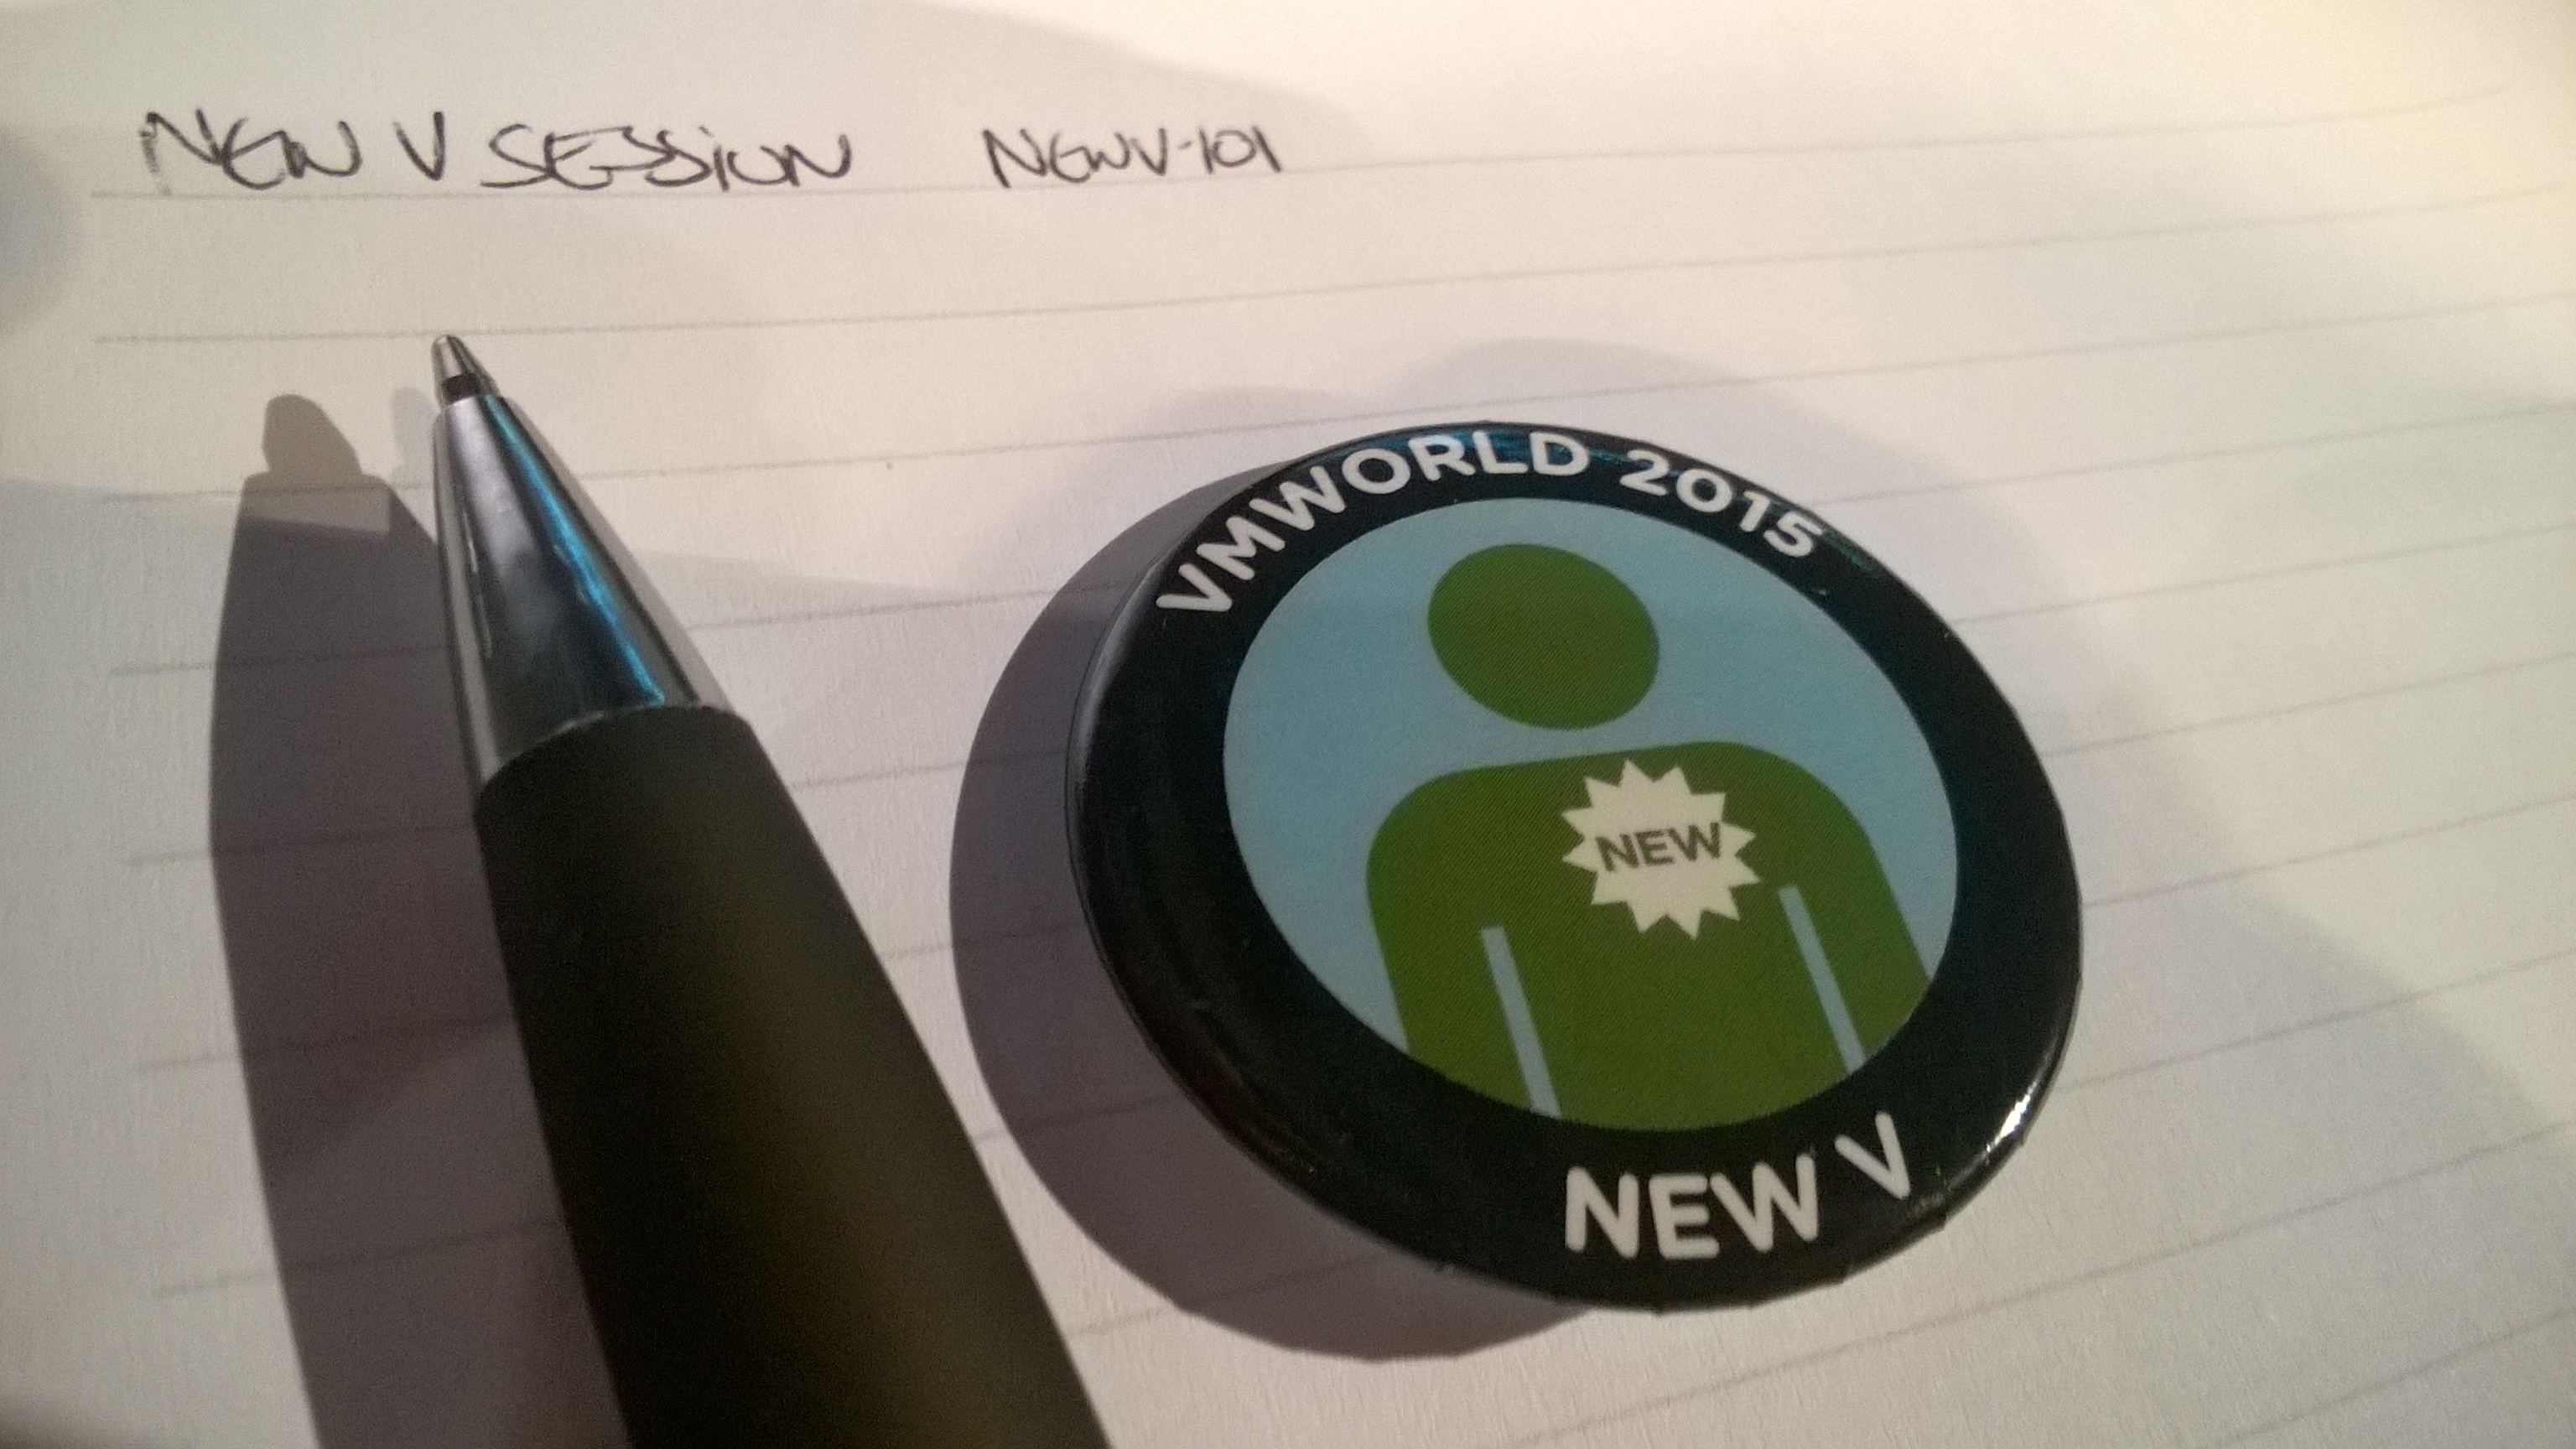 VMworld 2015 New V